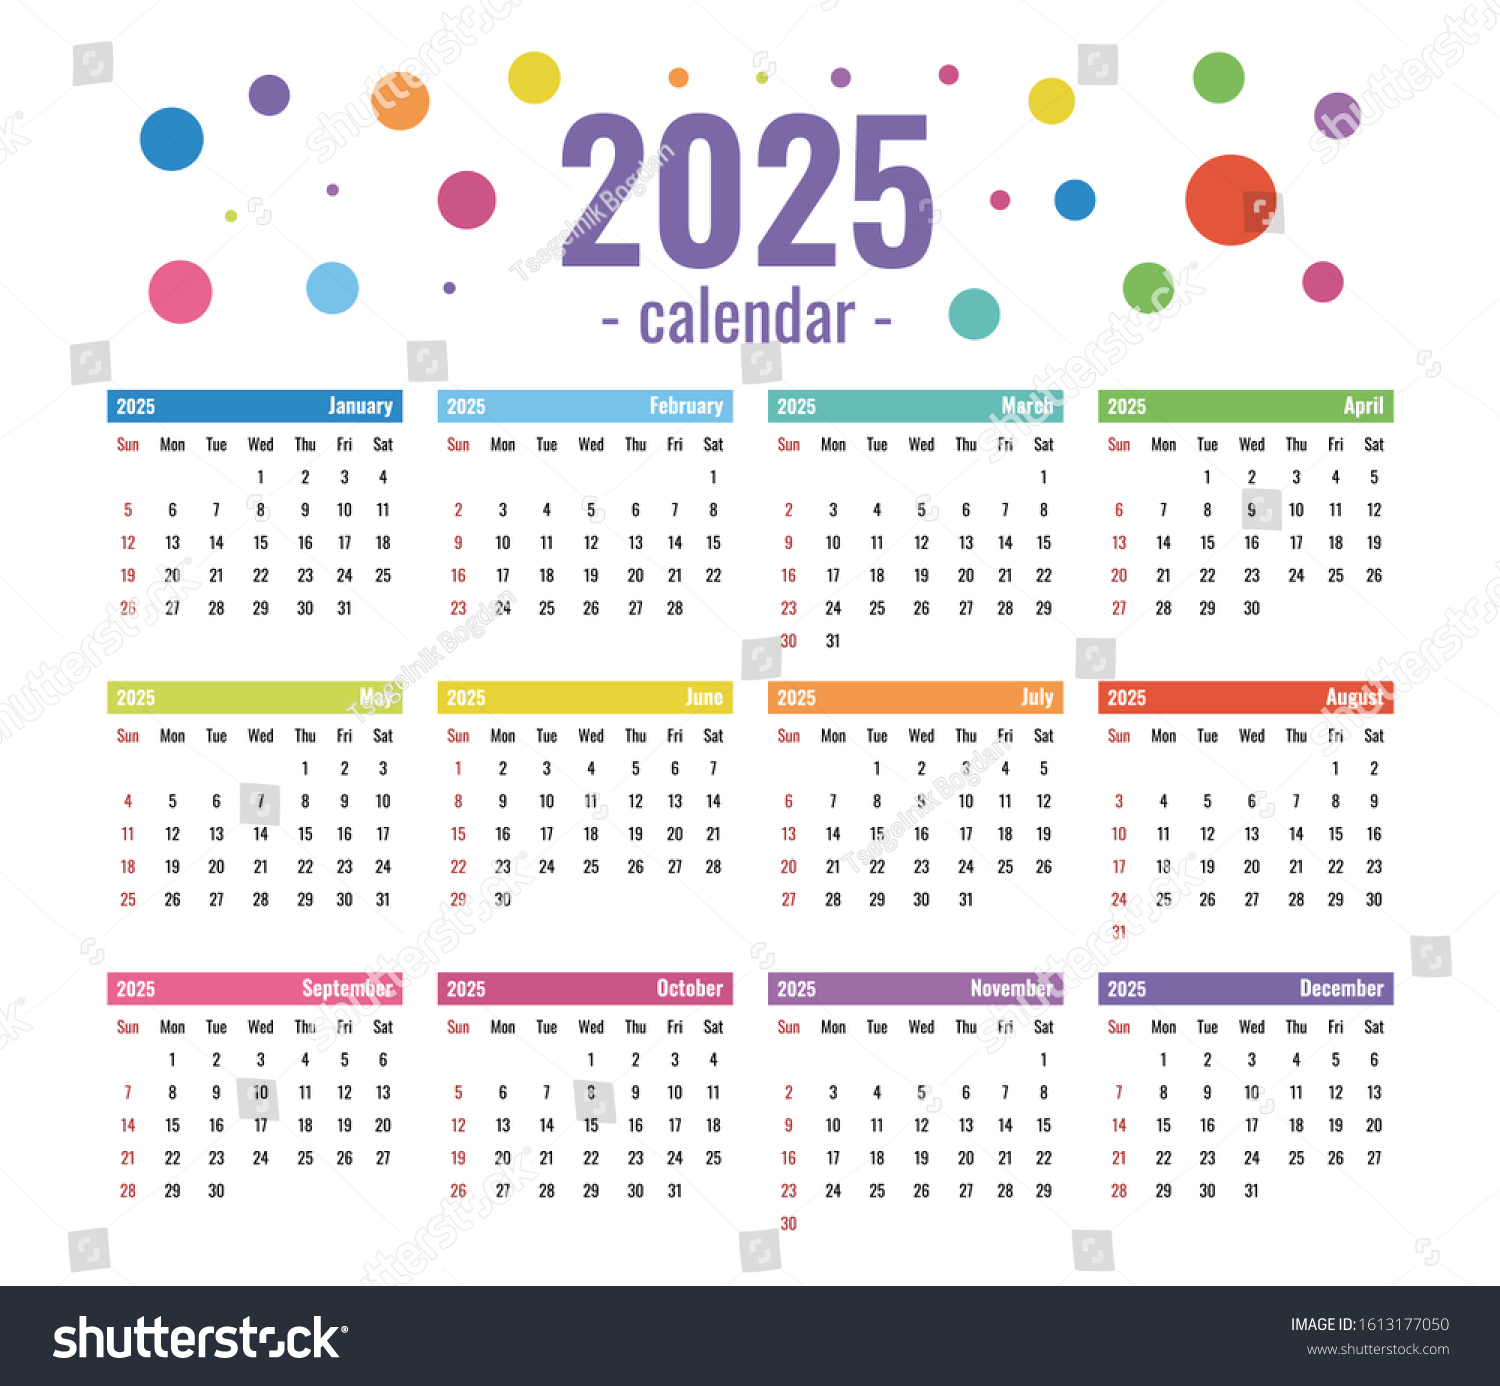 2025-calendar-template-everyday-use-colorful-stock-vektorgrafik-lizenzfrei-1613177050